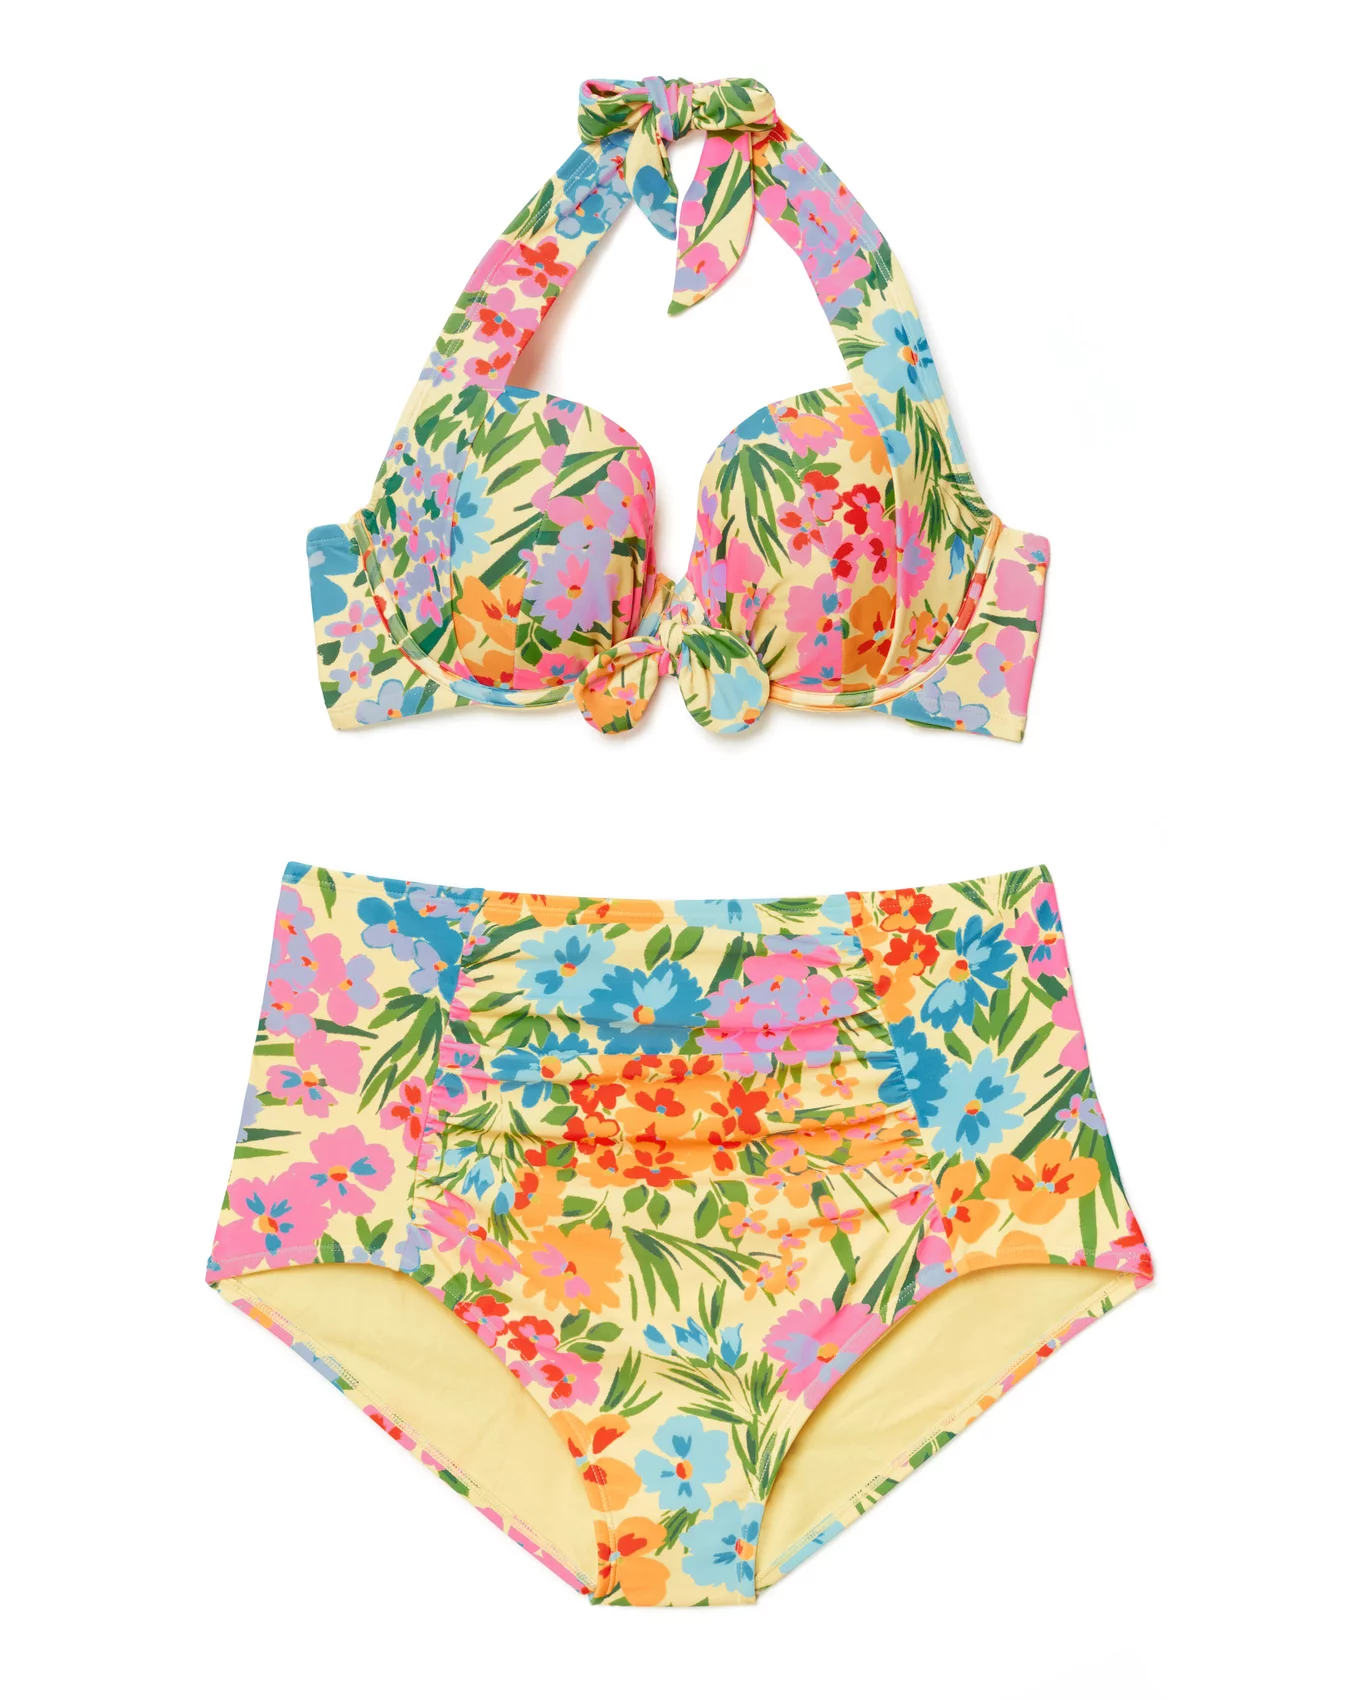 Two Piece Swimsuit for Women- Bikini Sets, Tankini